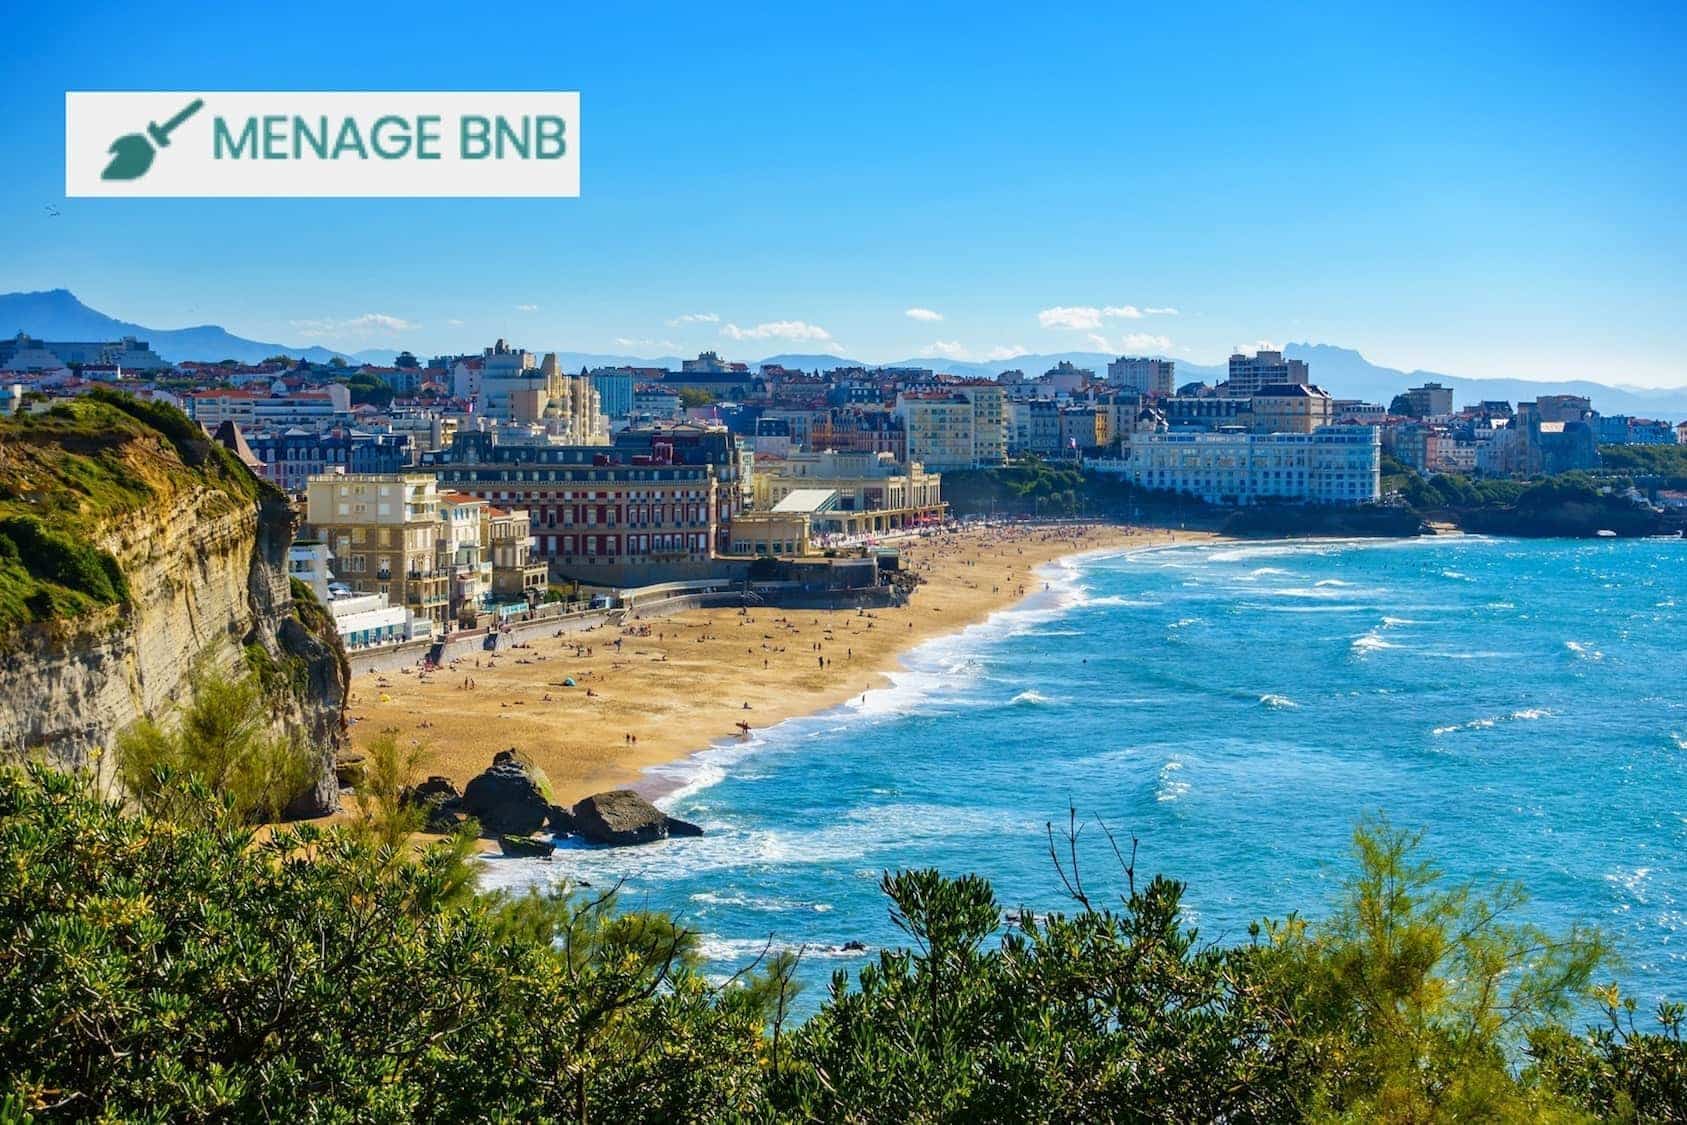 prix conciergerie airbnb biarritz, avis conciergerie airbnb biarritz, conciergerie airbnb bidart, conciergerie airbnb boucau